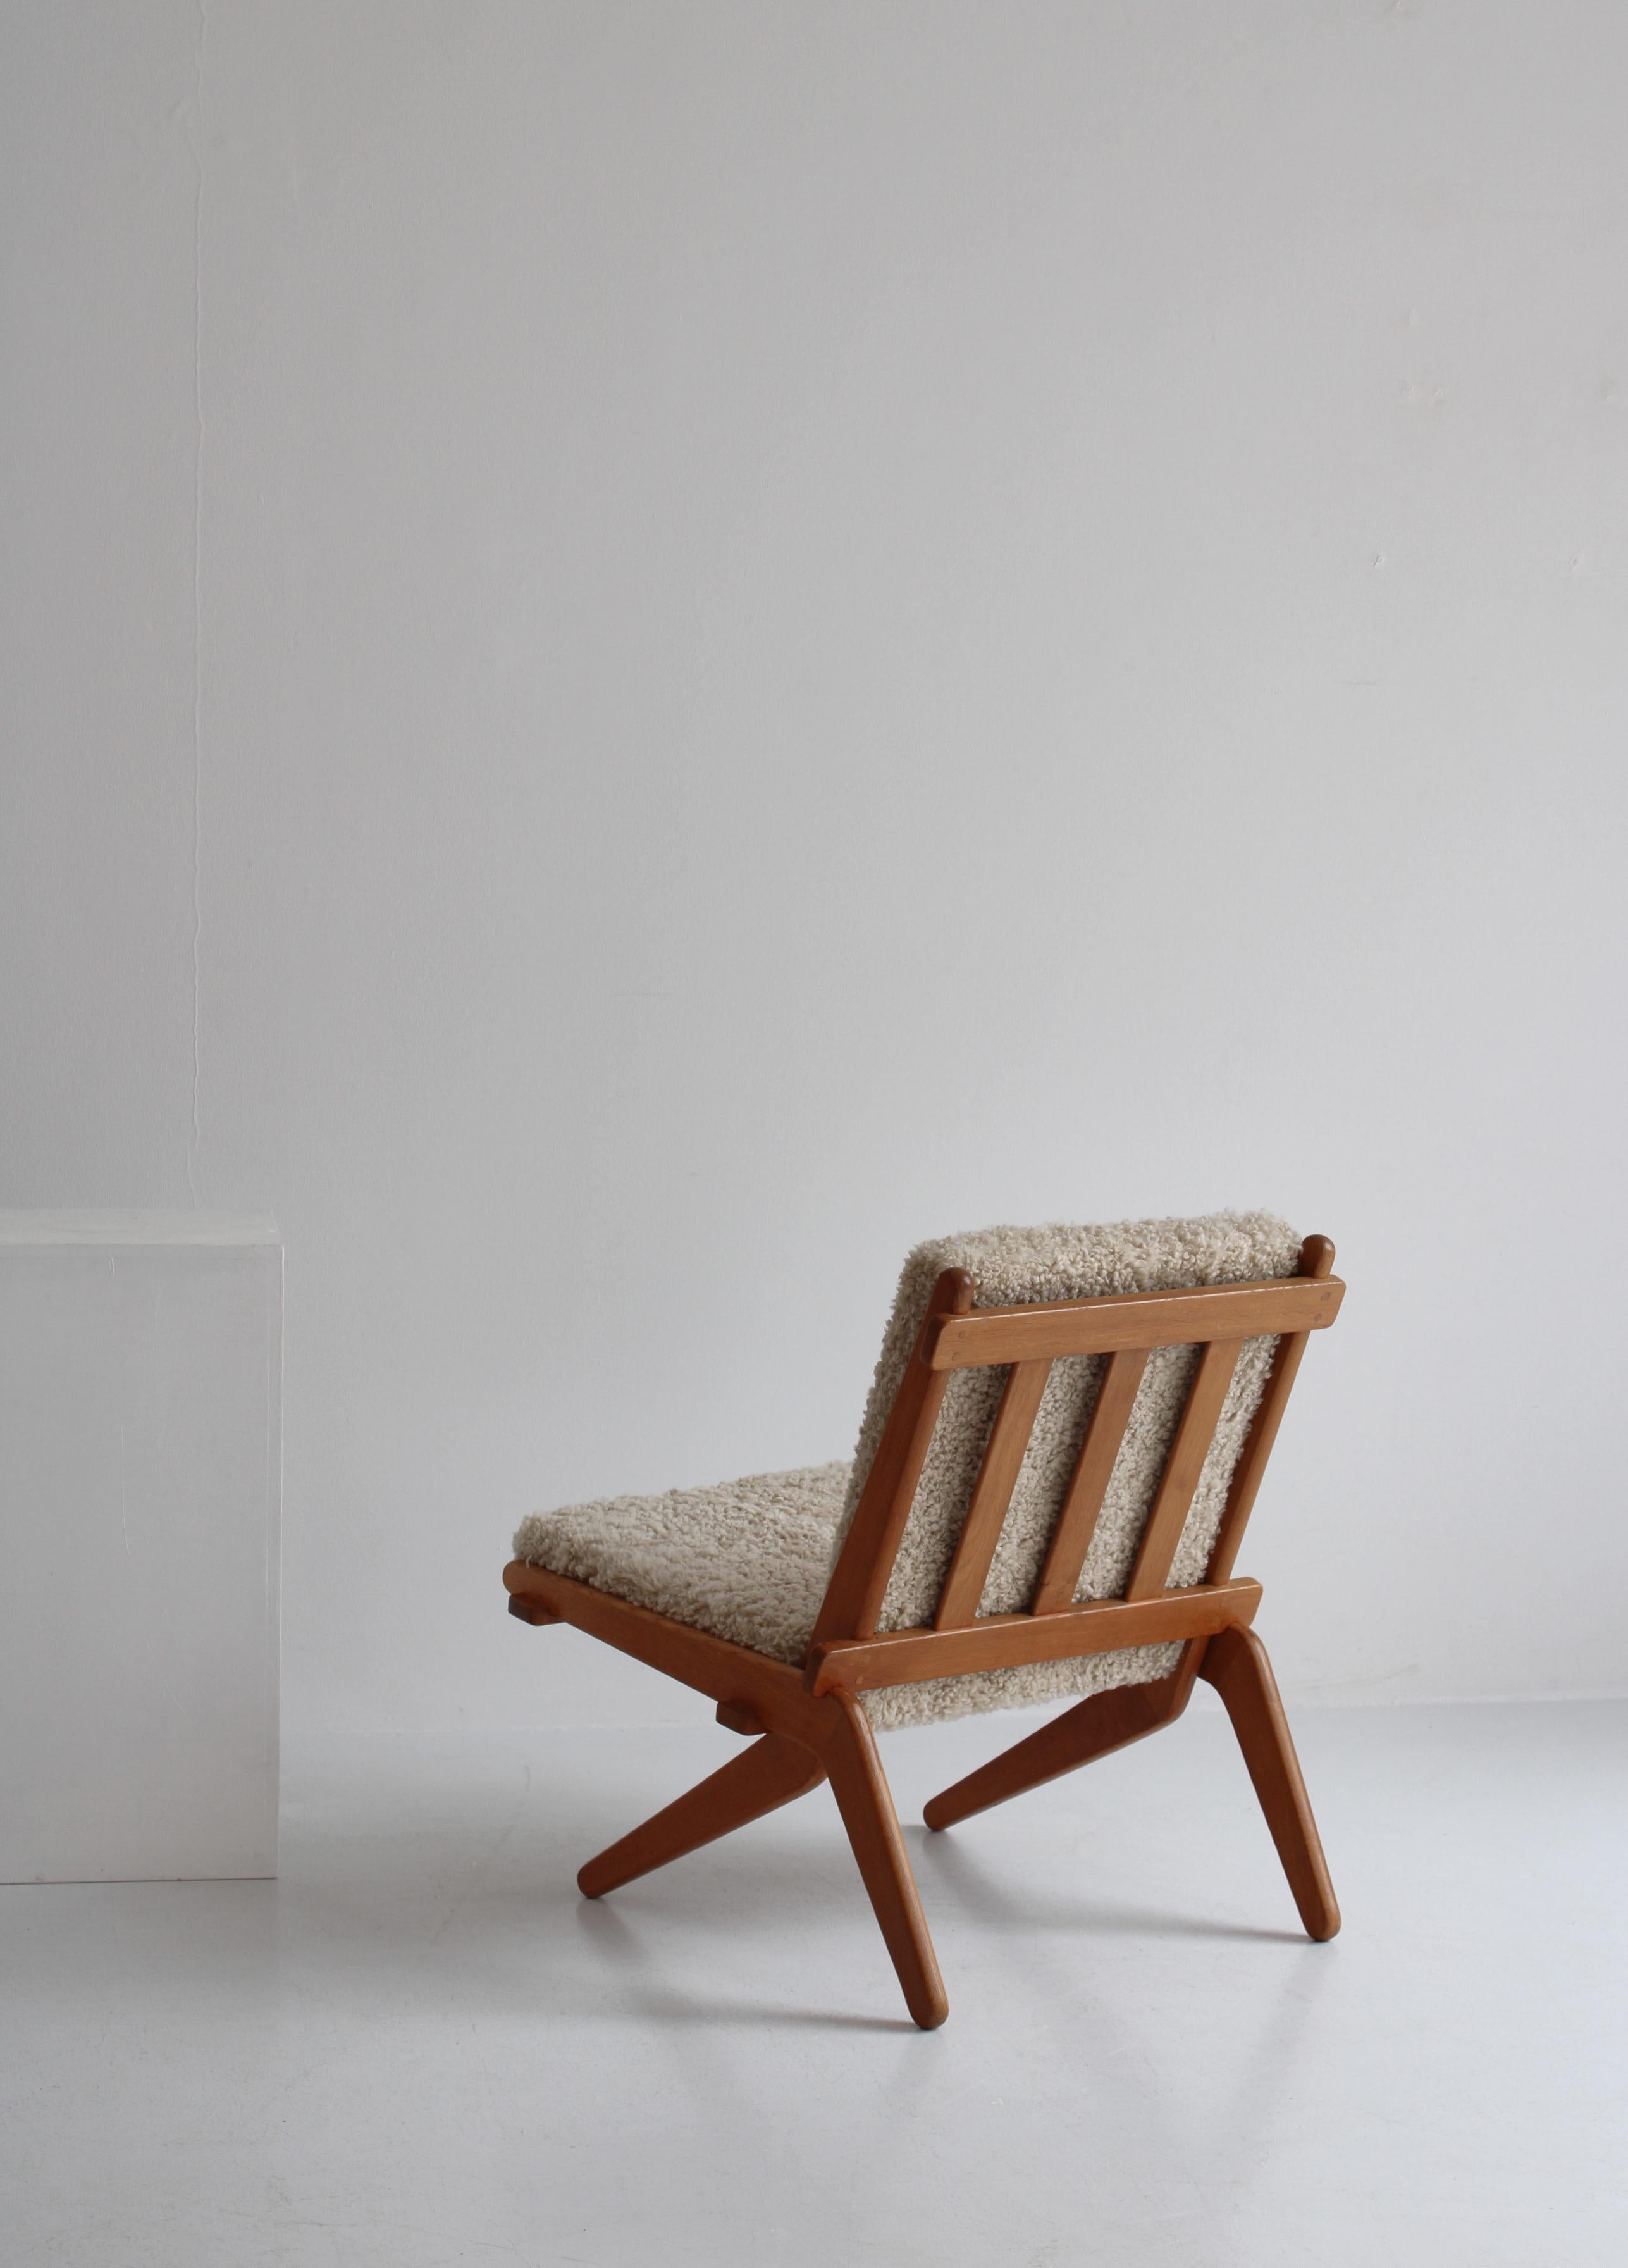 Danish Modern Folding Chair in Oak and Natural Sheepskin, Preben Thorsen, 1950s In Good Condition For Sale In Odense, DK